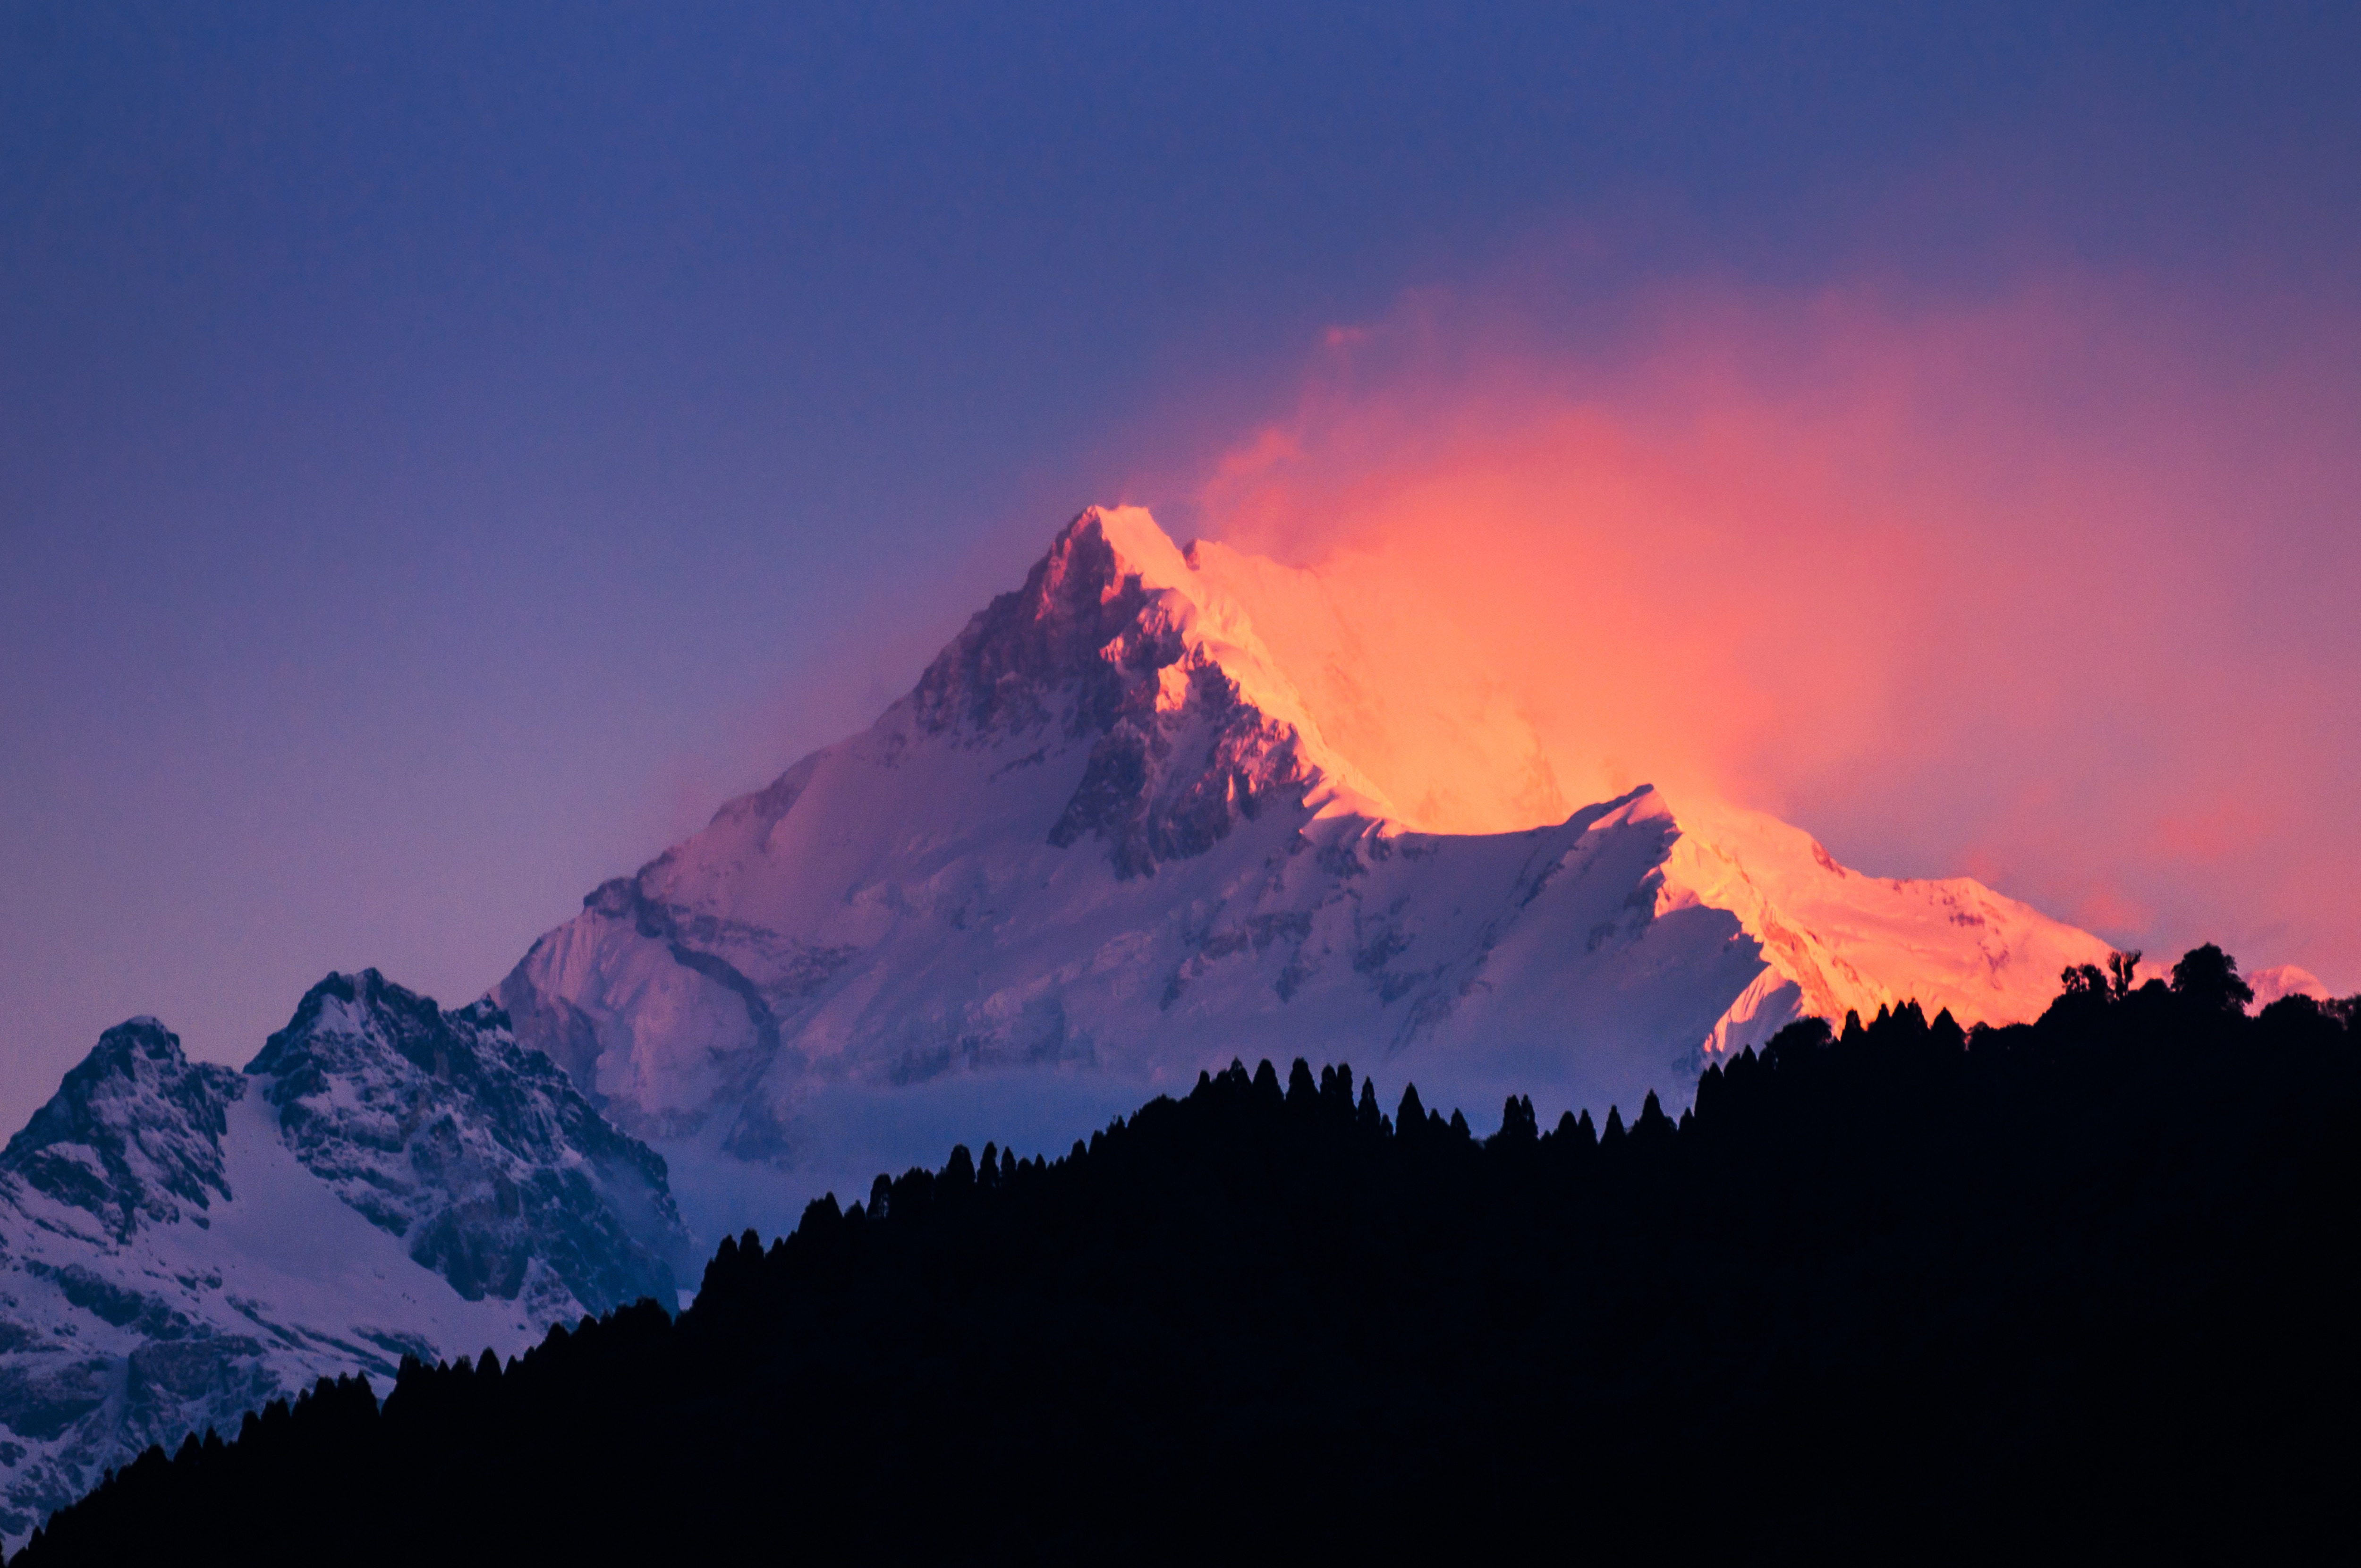 Majestic Himalayas